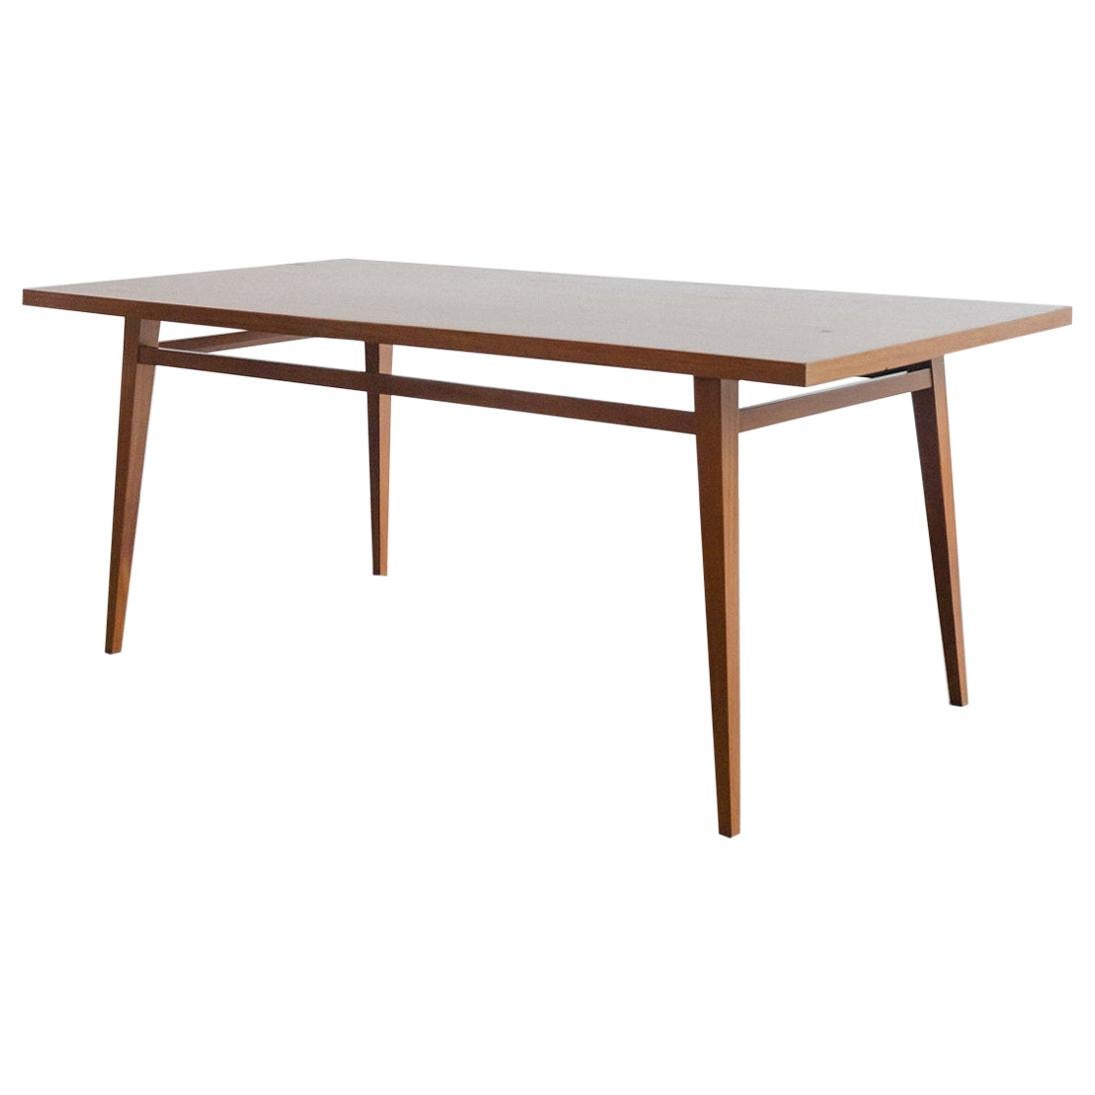 Brazilian Hardwood Table by Joaquim Tenreiro, 1947, Midcentury Design For Sale